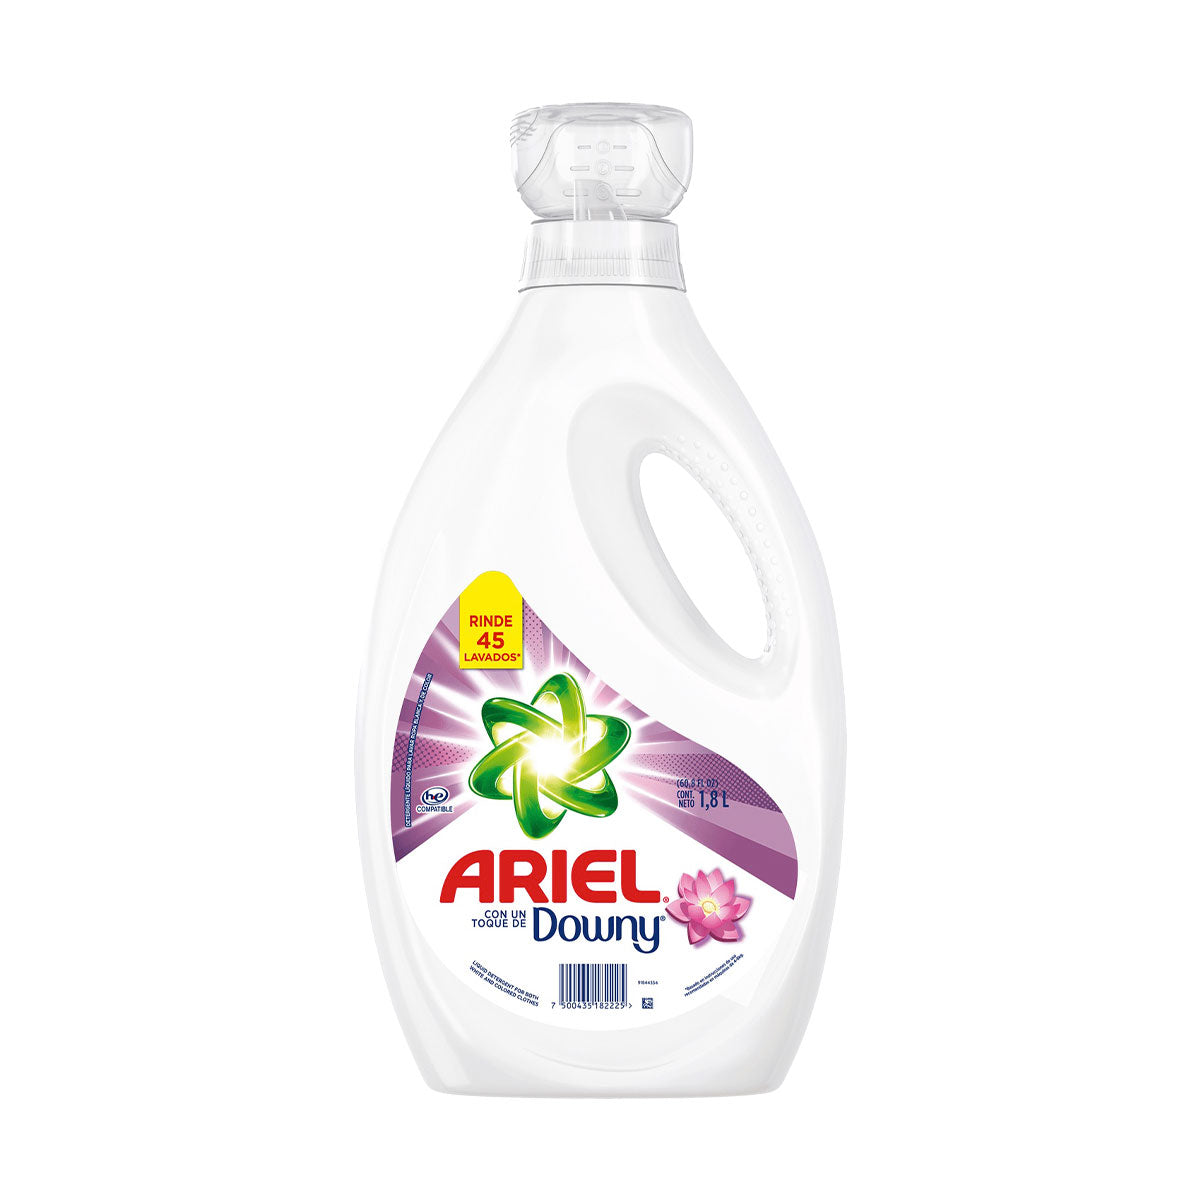 Detergente Ariel Líquido Color HD